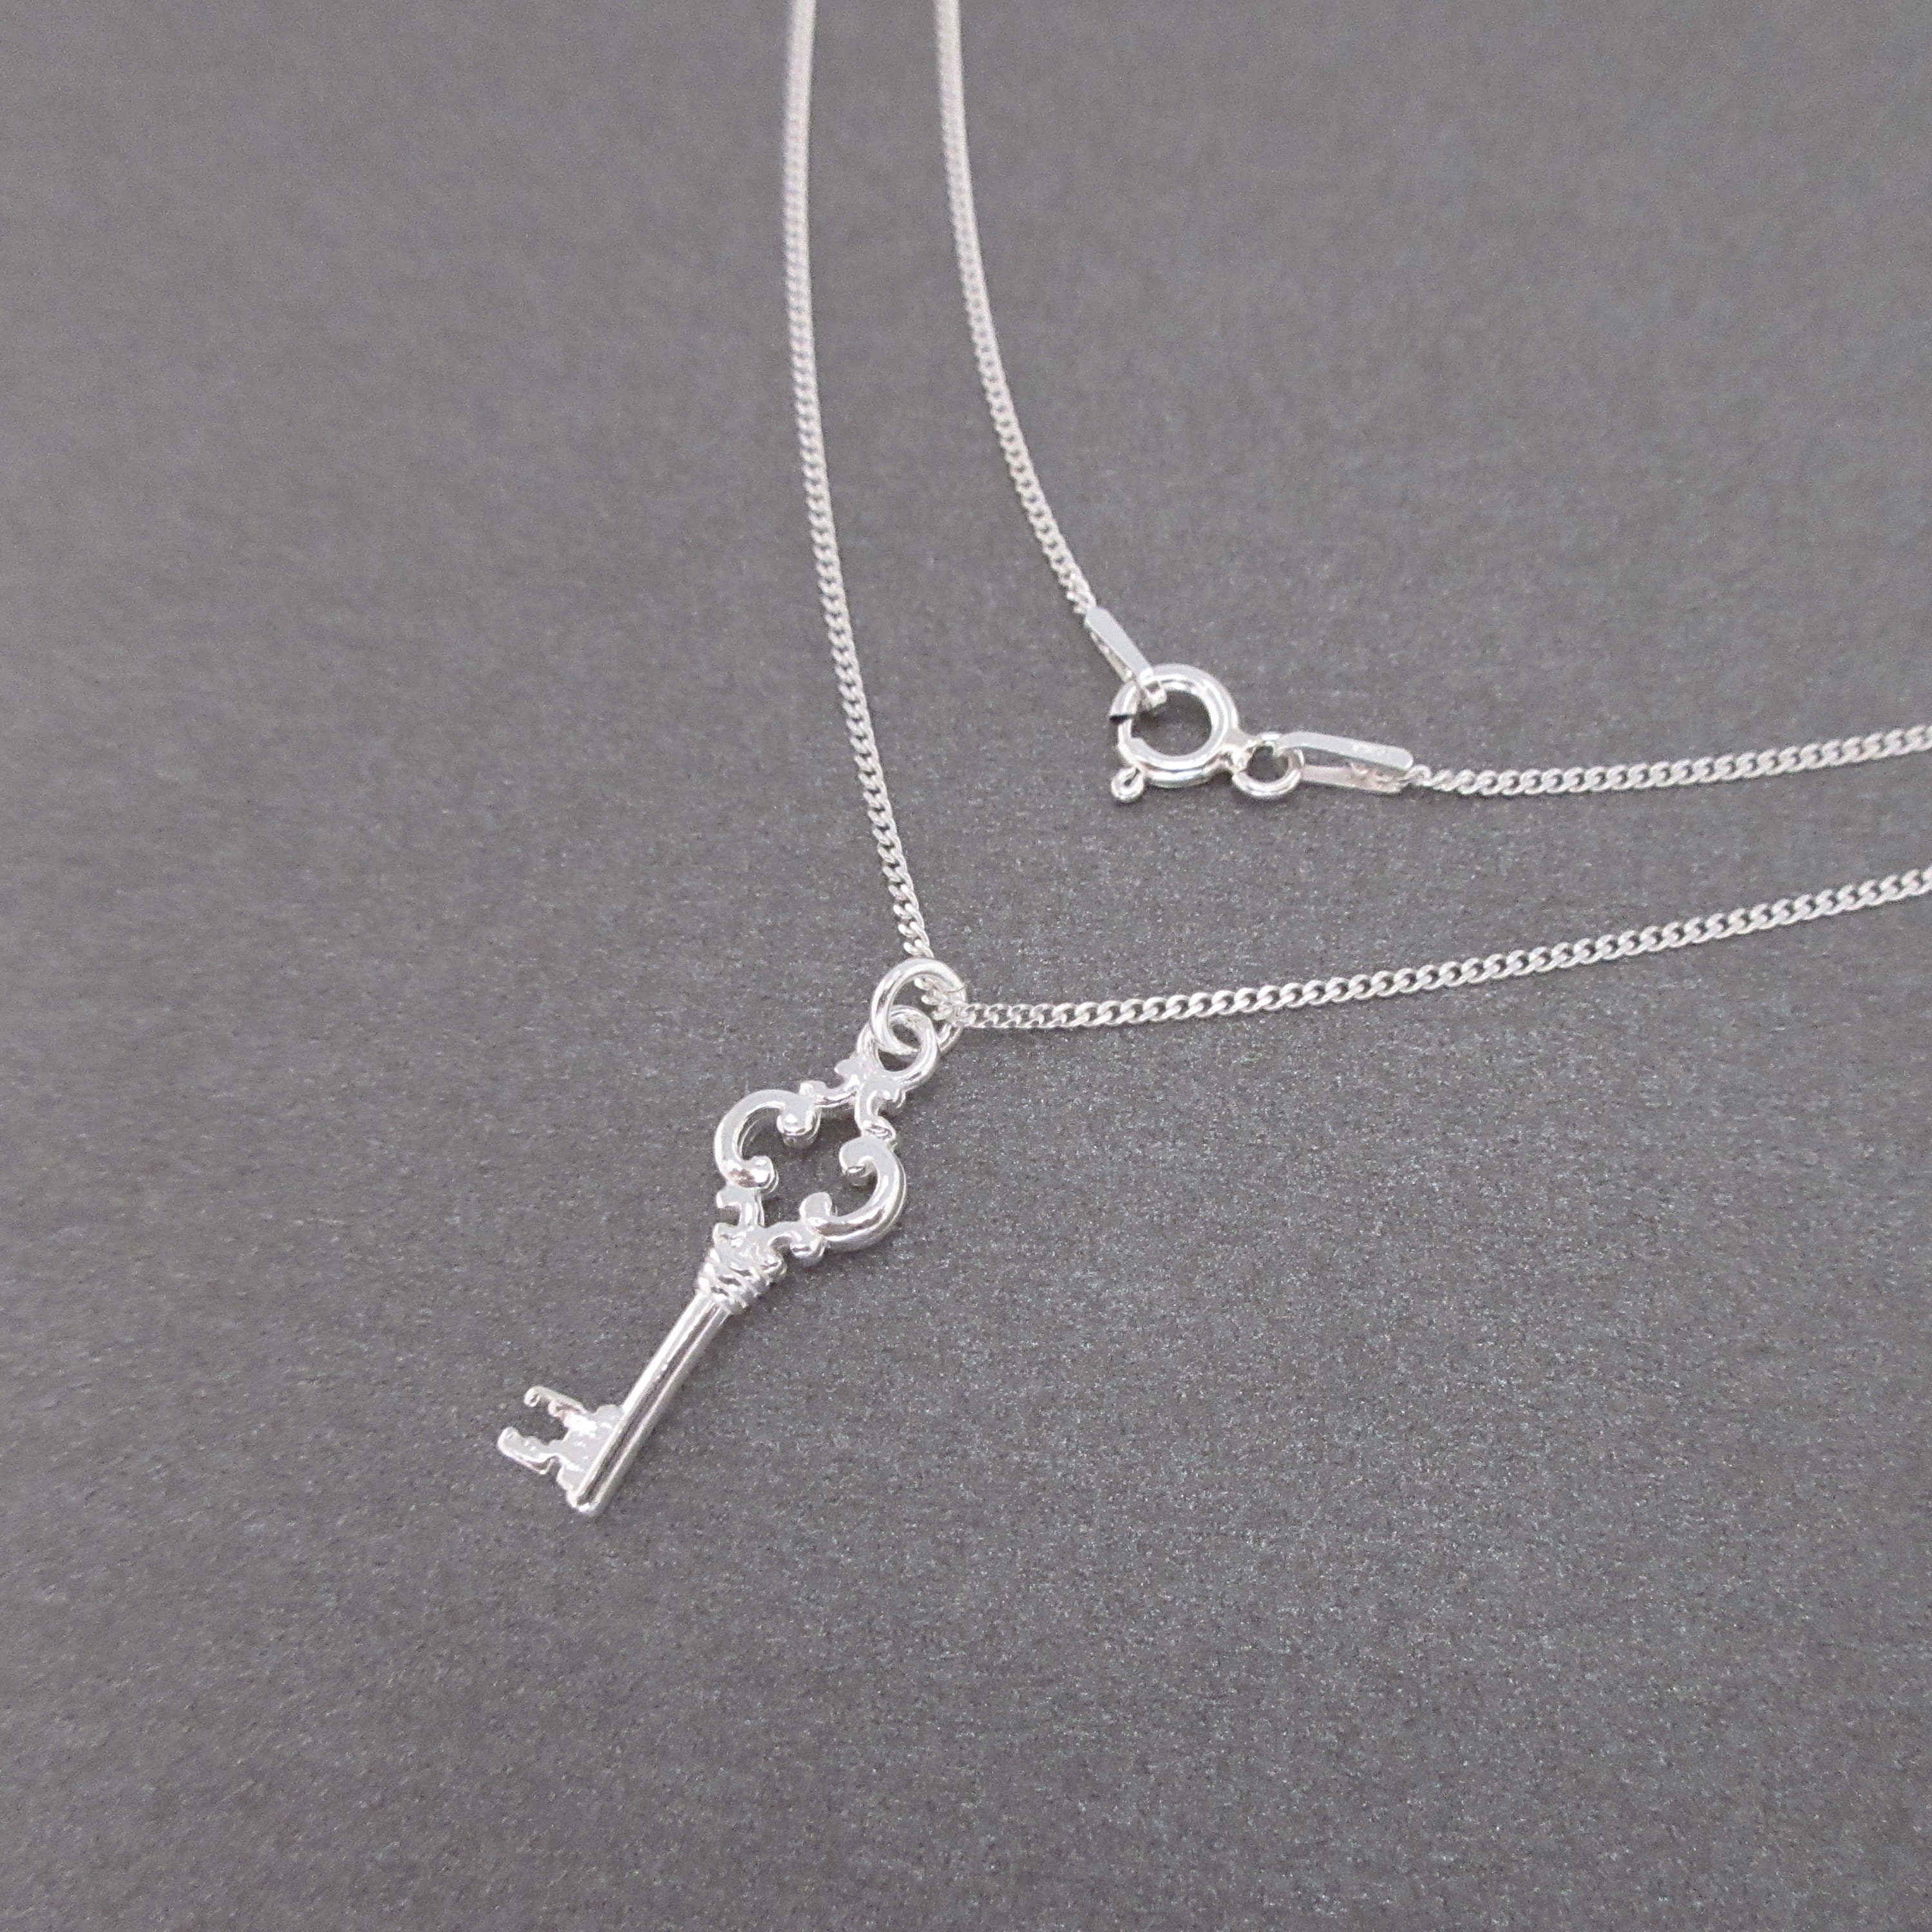 Necklace Small Pendant Minimalist Key Delicate Silver